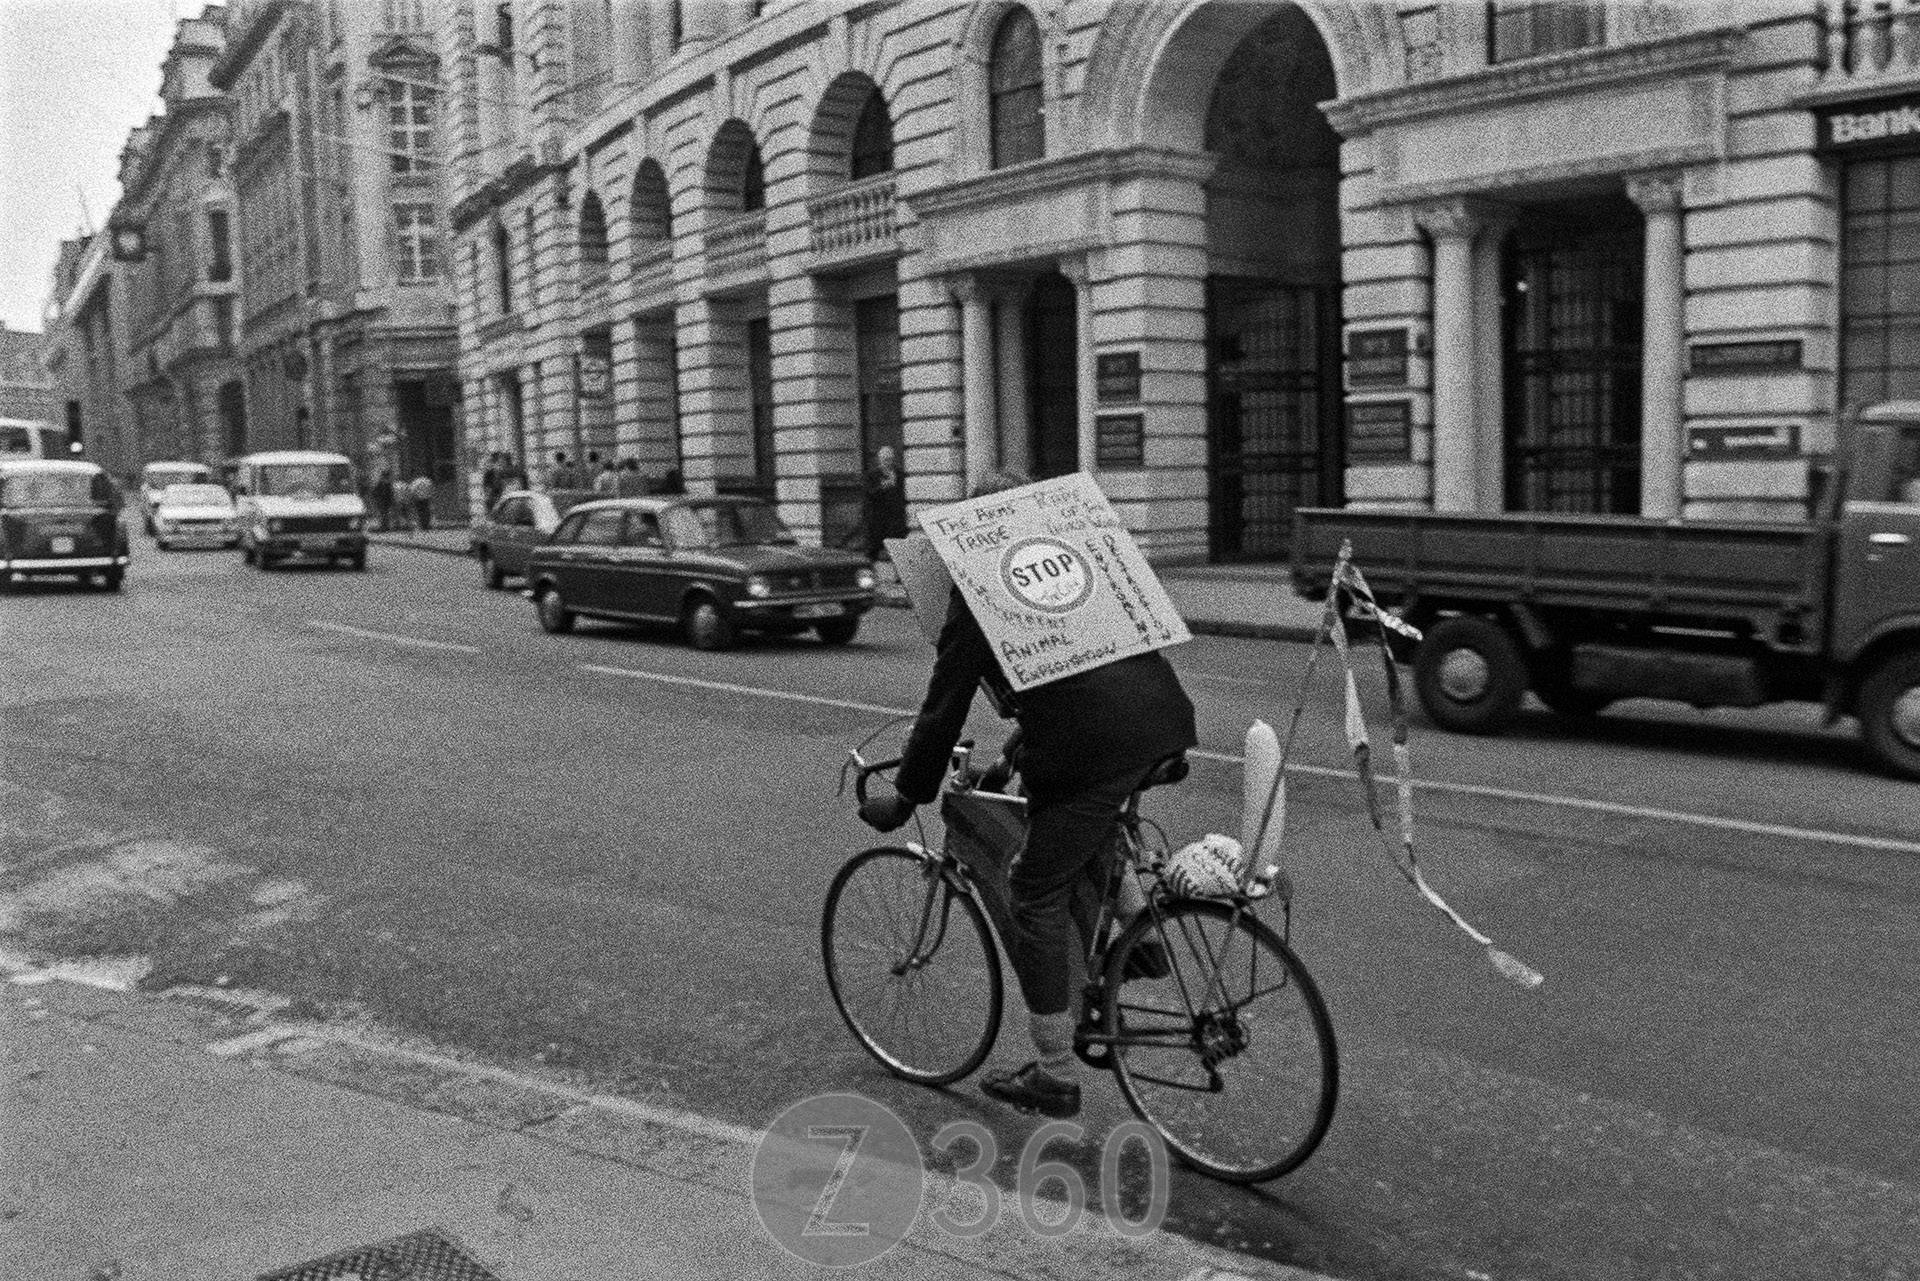 Protestor on a bike